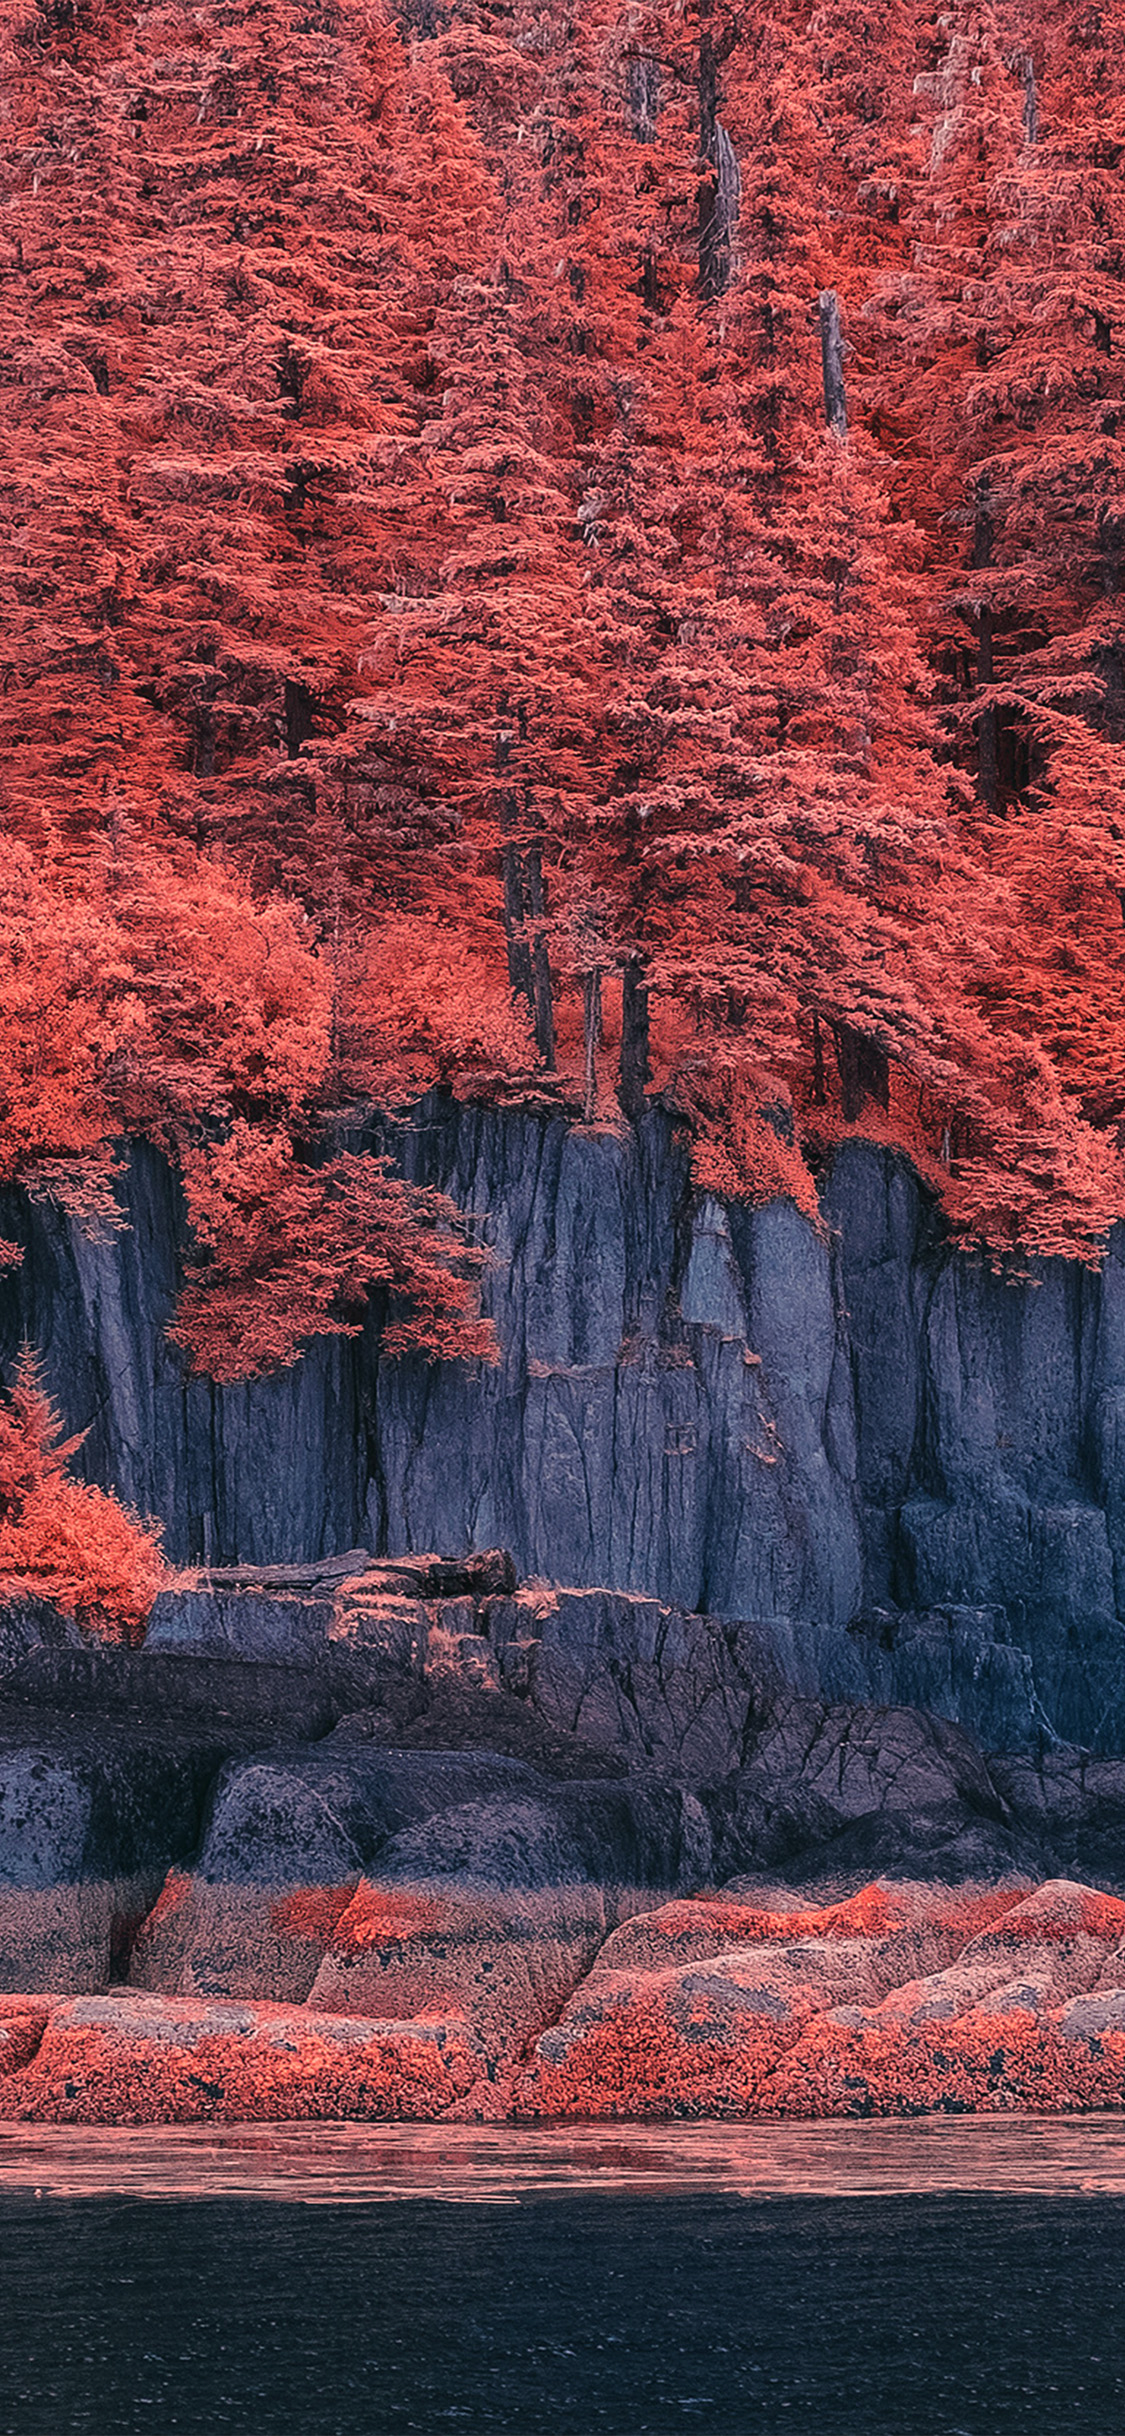 iPhone X wallpaper. mountain red tree nature art illustration